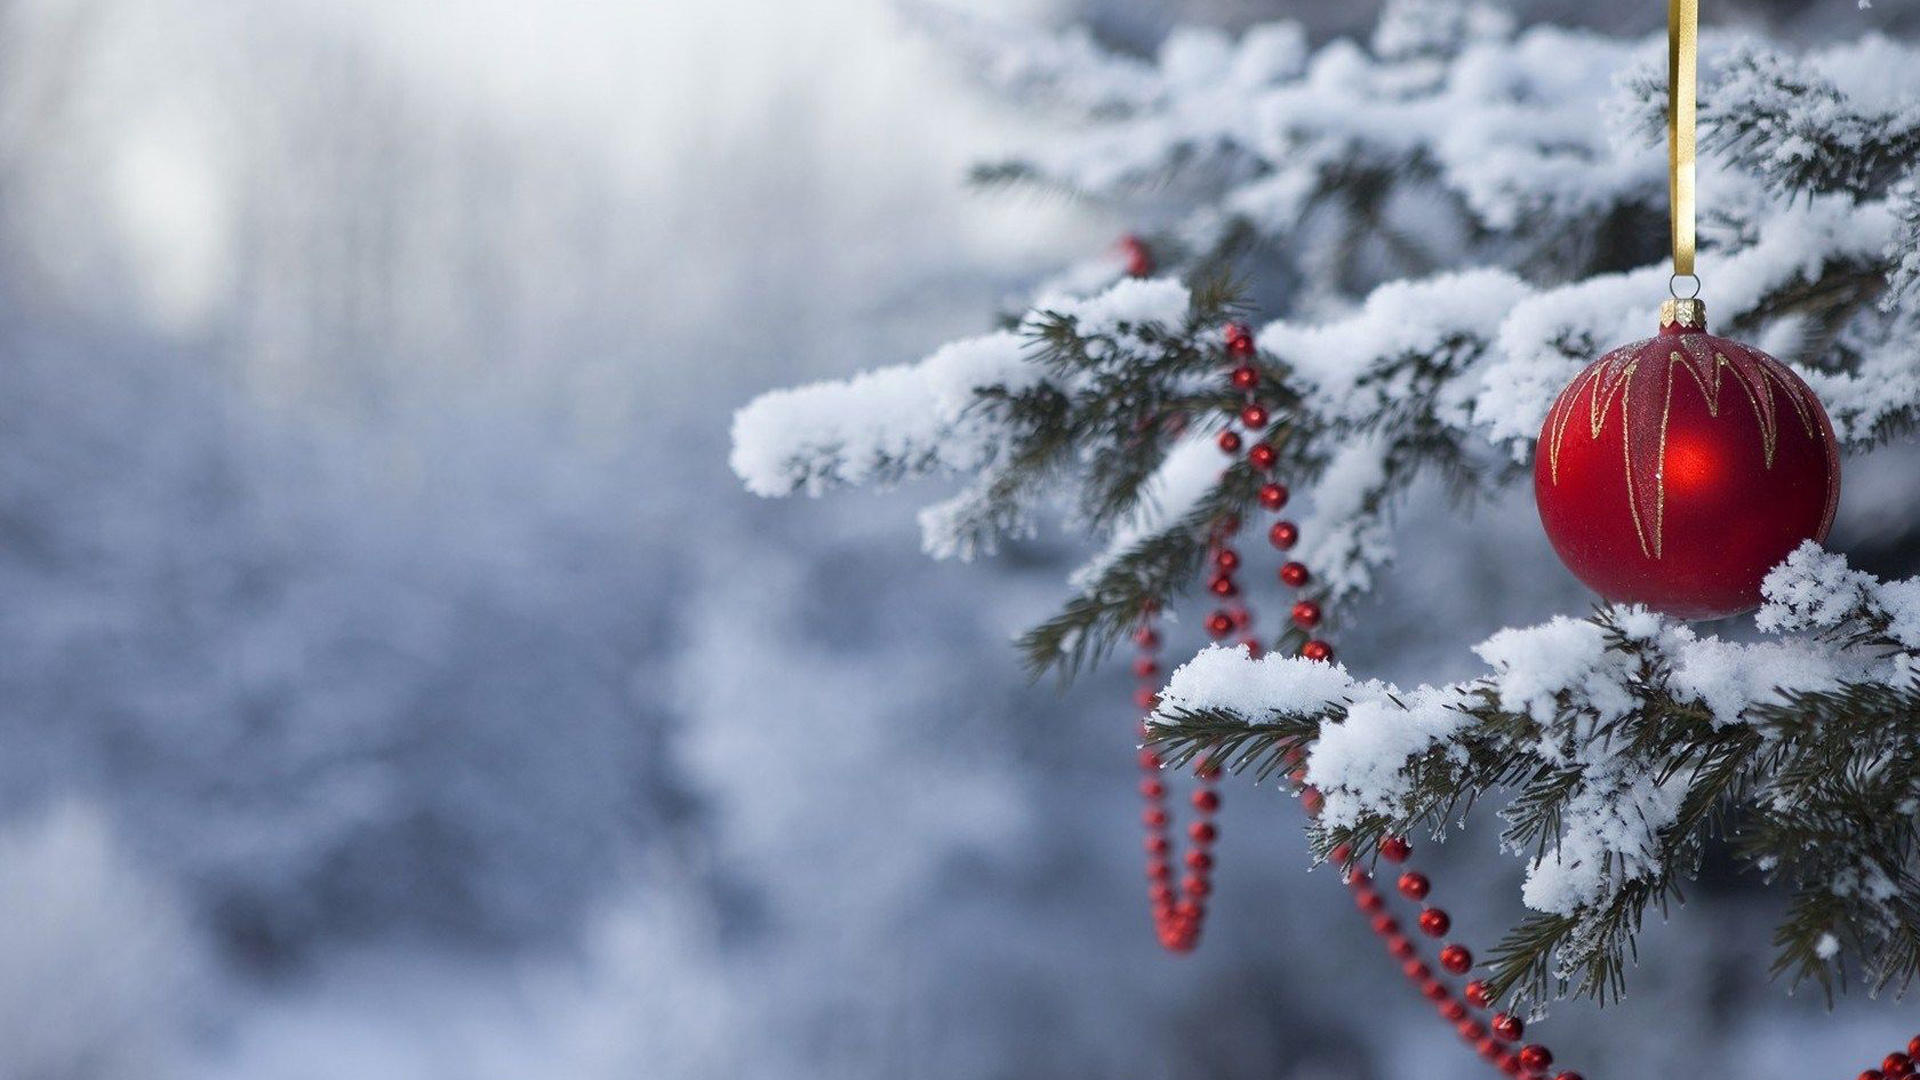 Snow Covered Pine Tree With Red Christmas Ball 2K Christmas